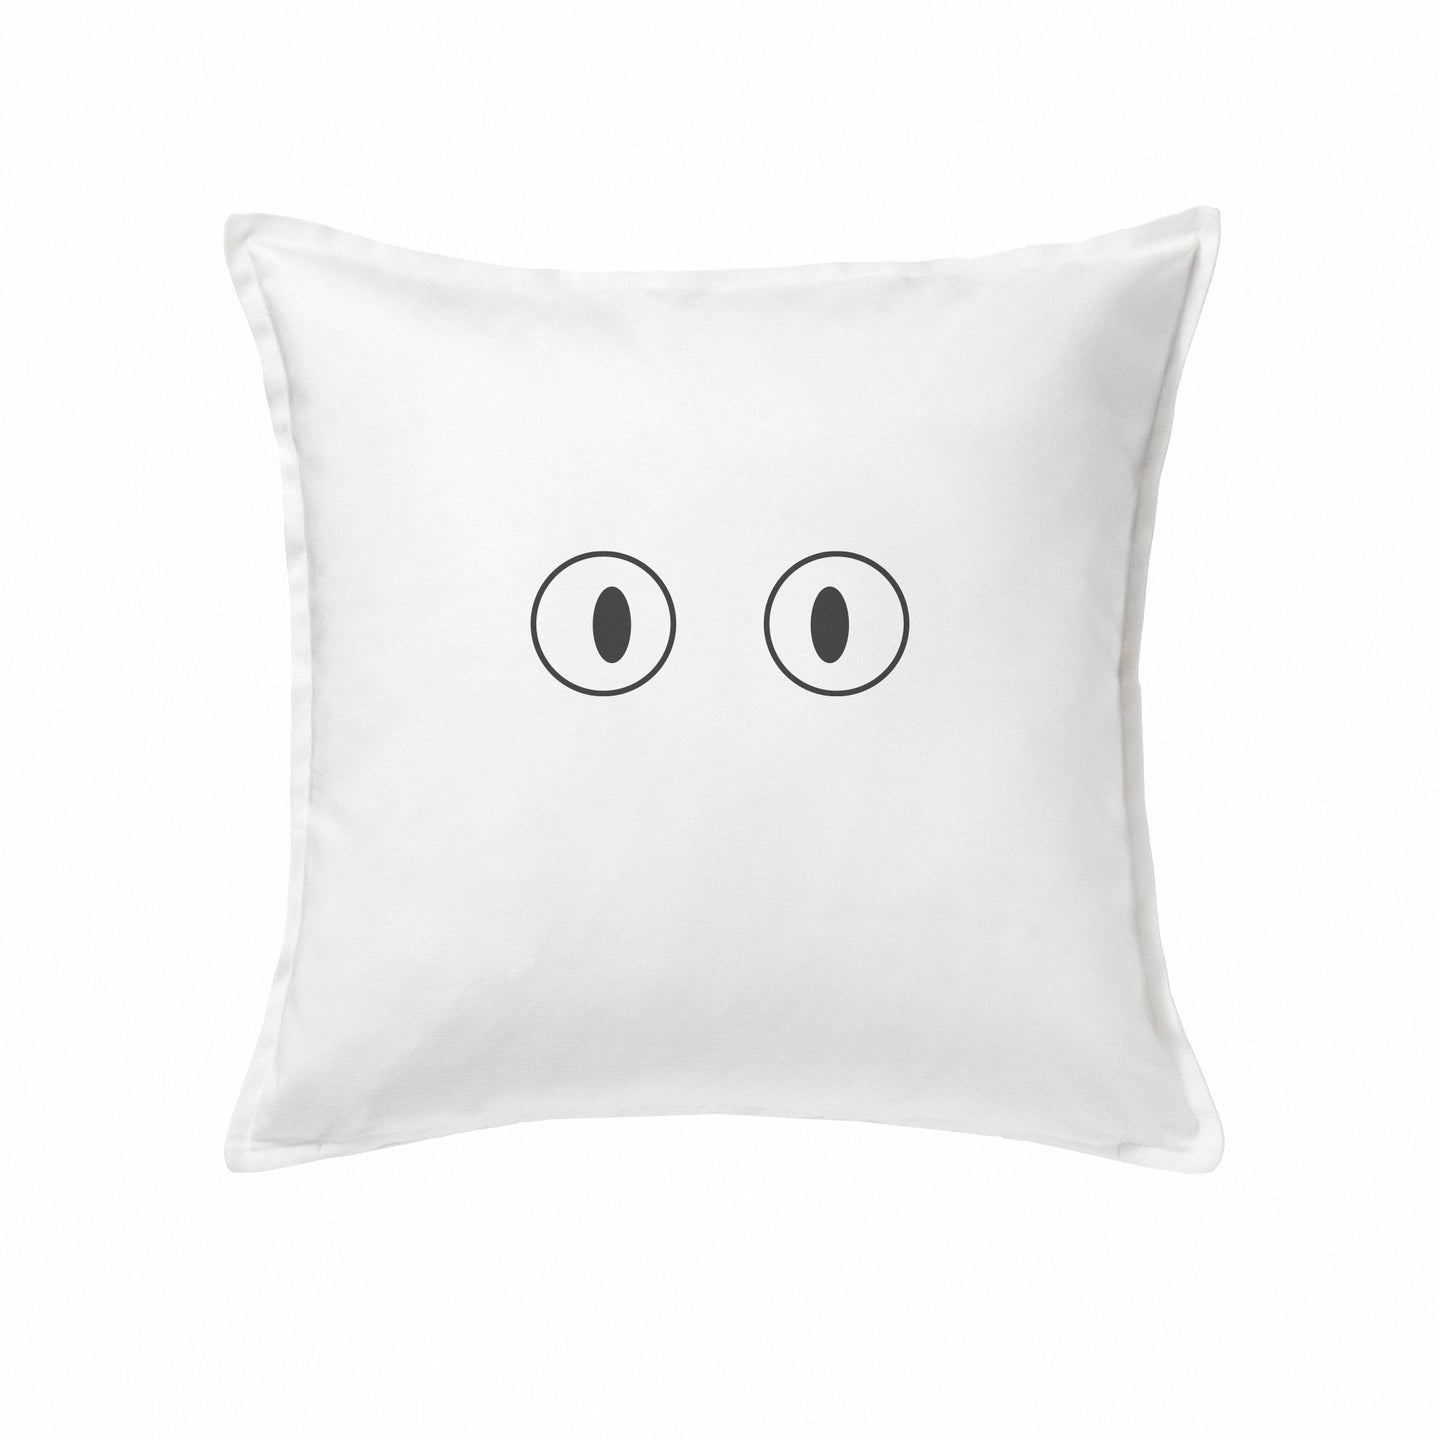 Cat cushion, cover 50x50cm (20x20